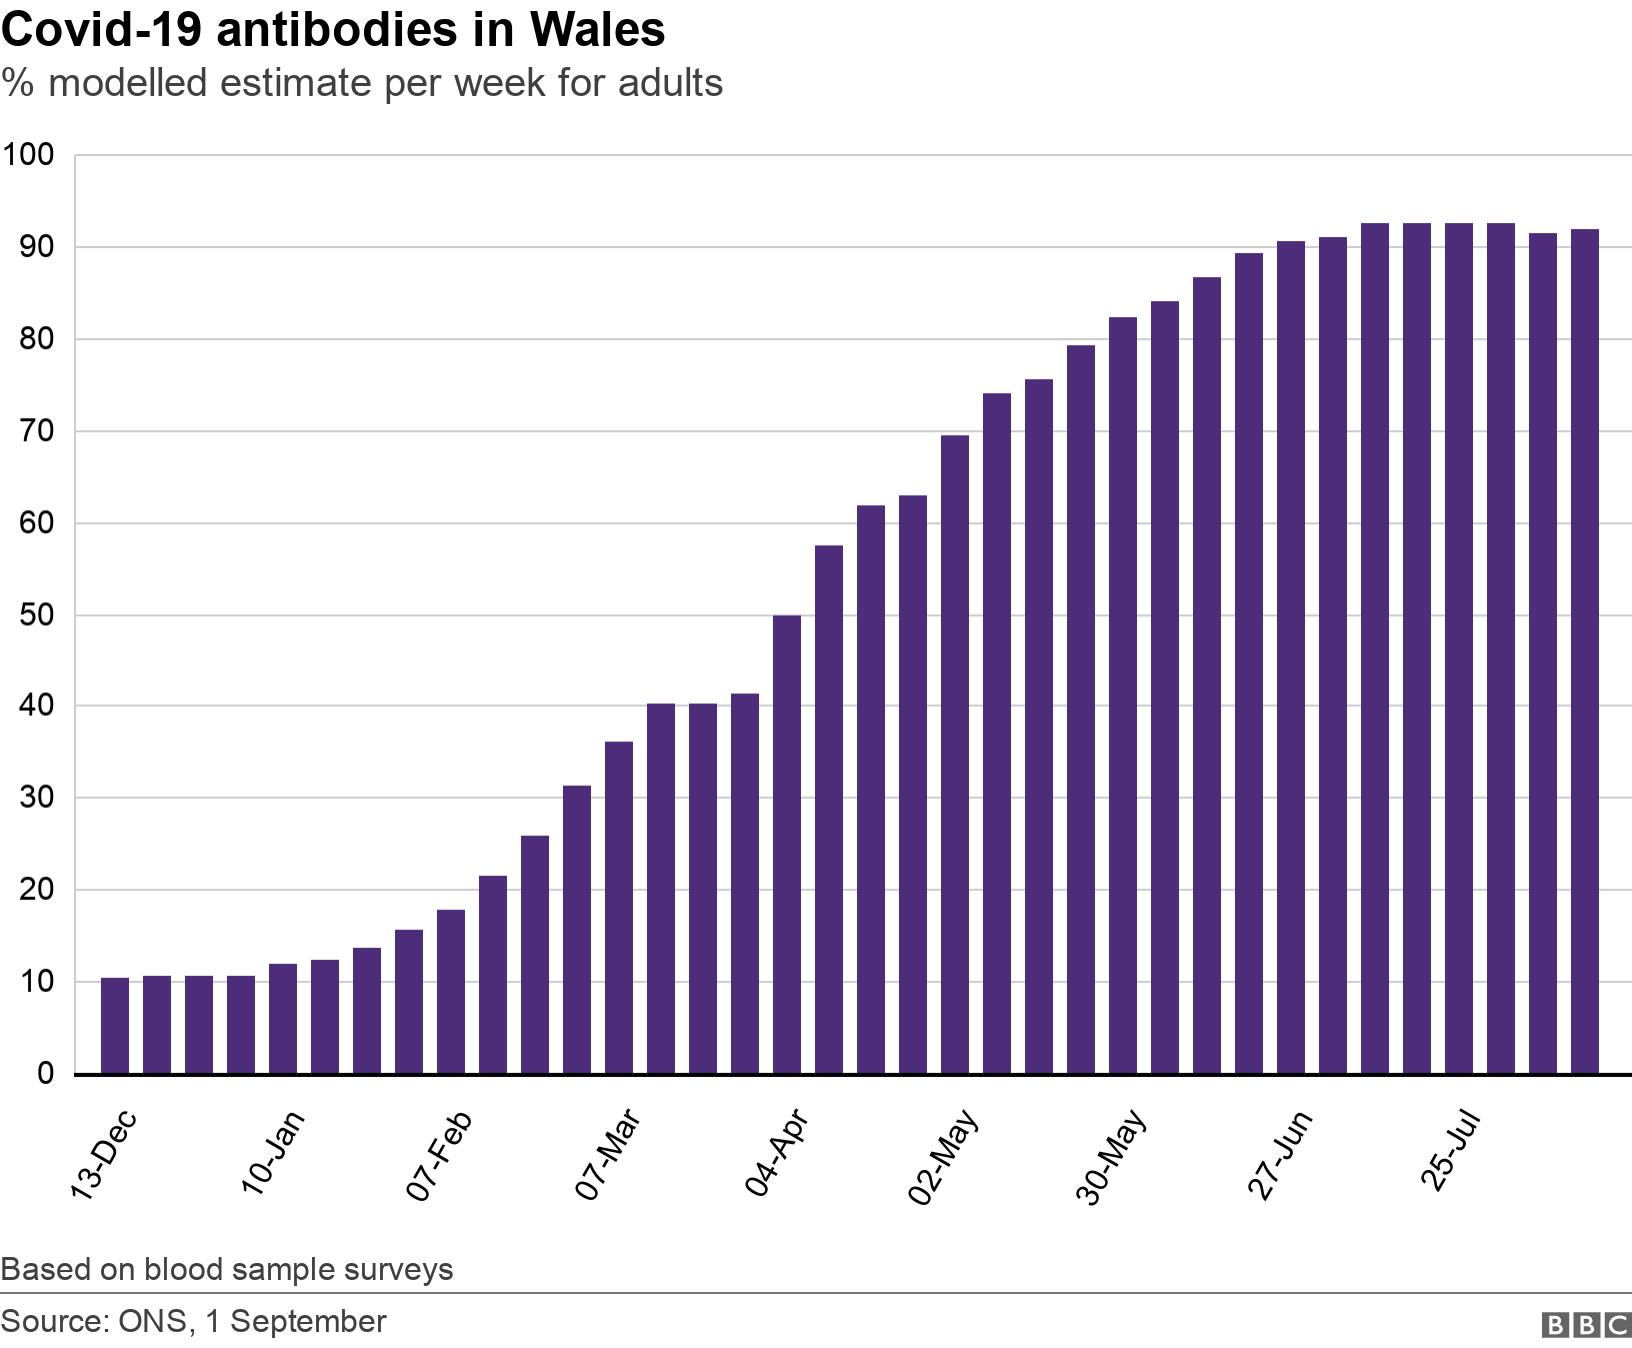 Covid-19 antibodies in Wales. % modelled estimate per week for adults.  Based on blood sample surveys.